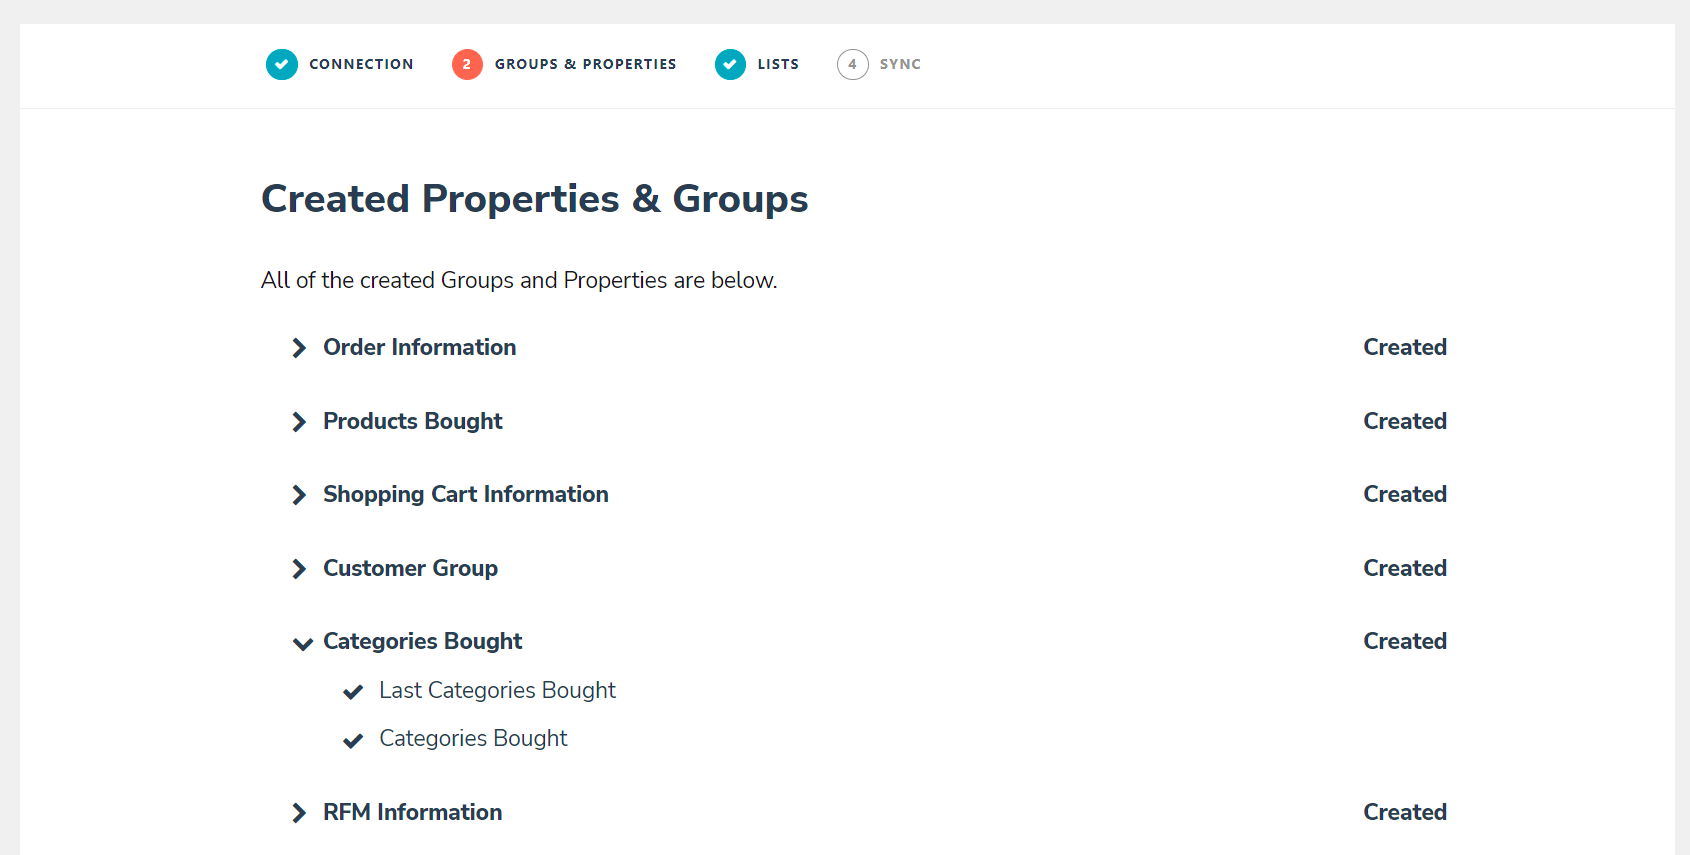 Created properties & groups